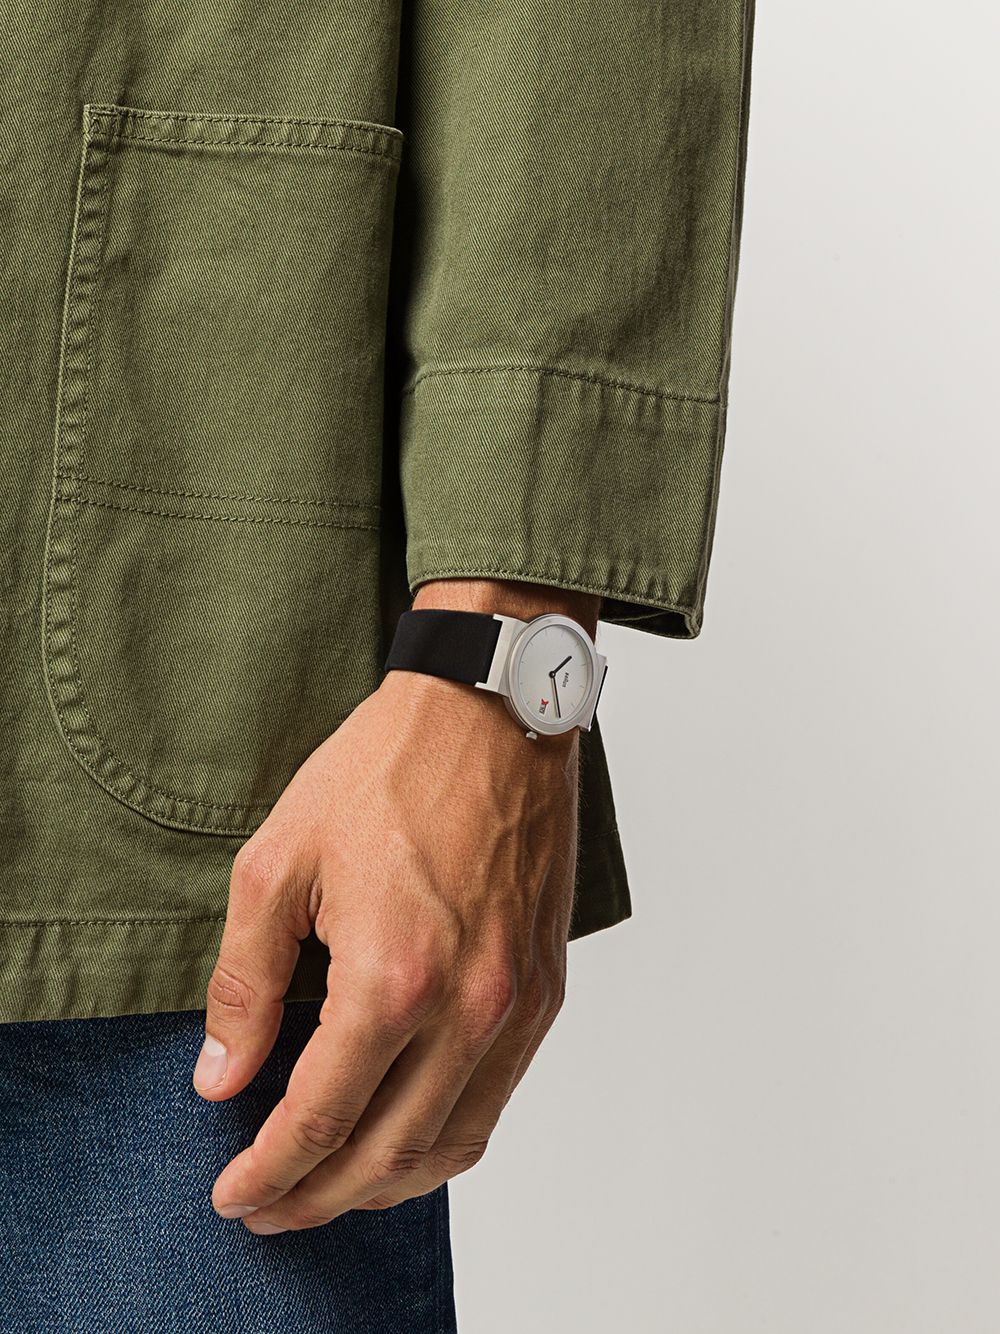 Braun Watches AW50 horloge - Zwart